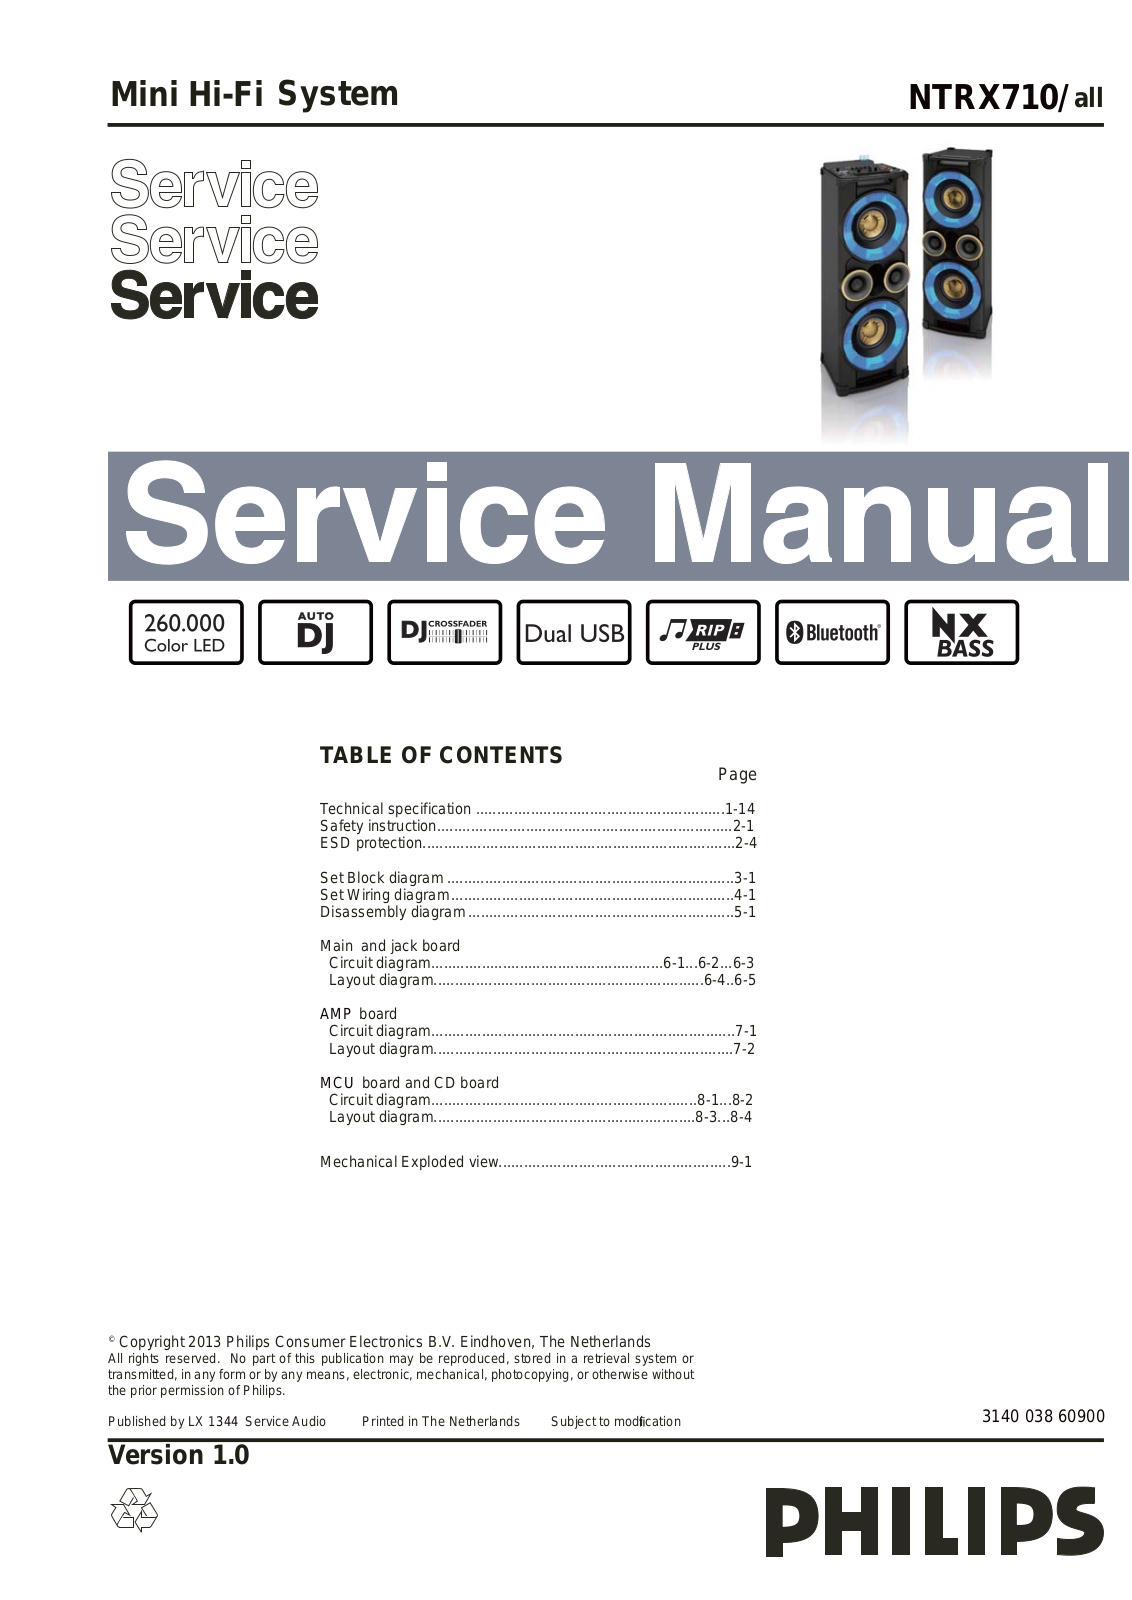 Philips NTRX-710 Service Manual